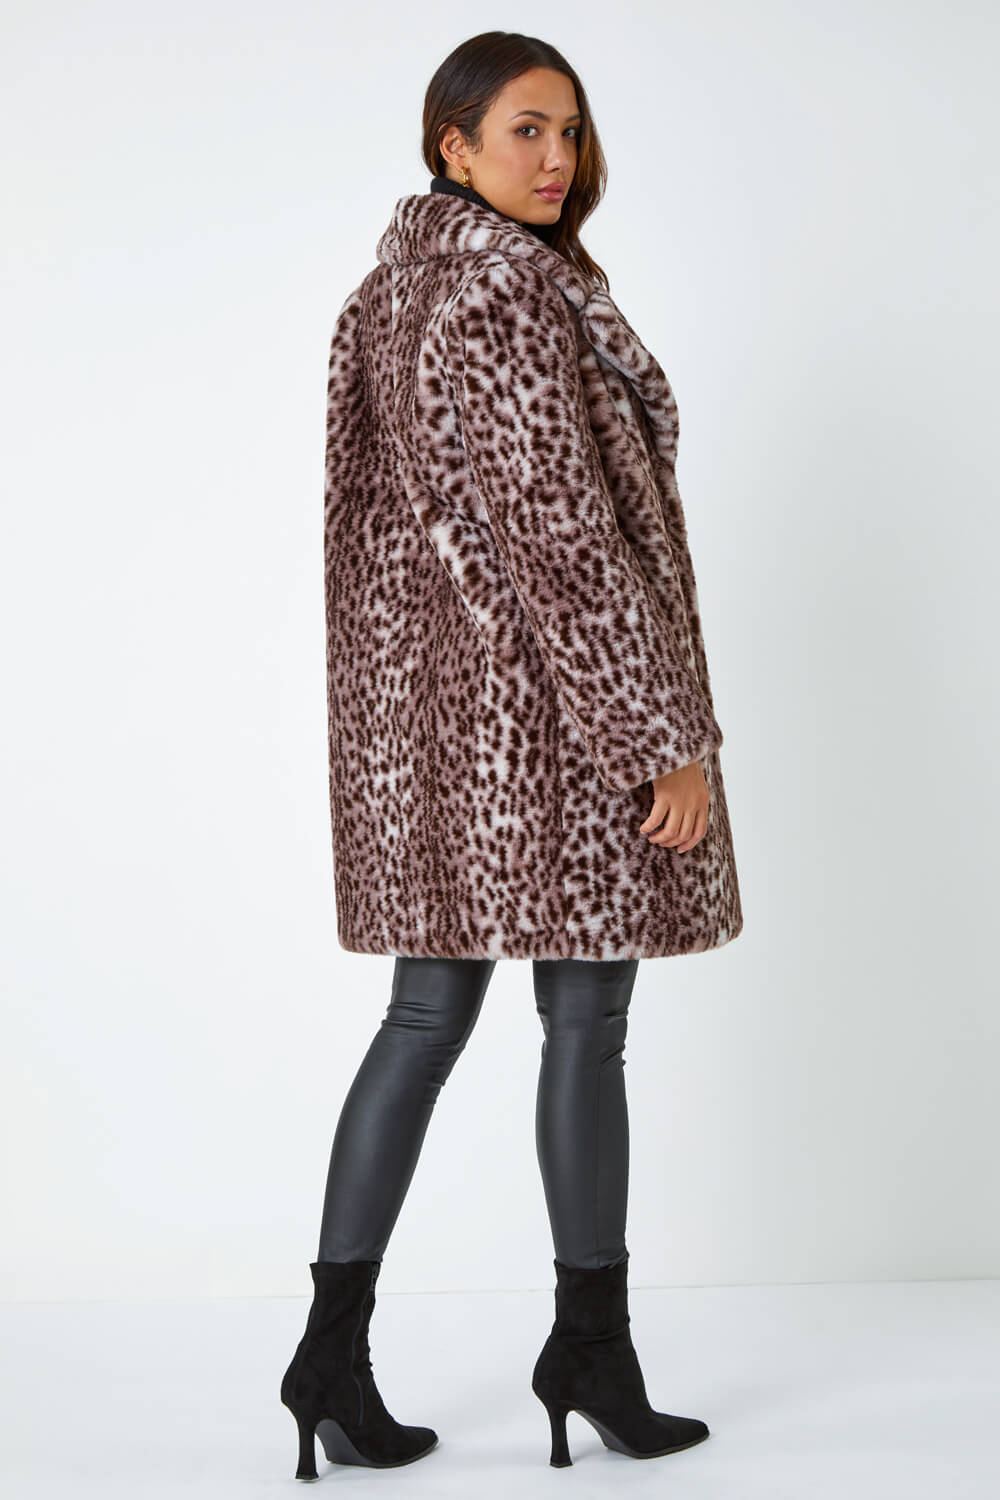 Taupe Premium Animal Print Faux Fur Coat, Image 3 of 5